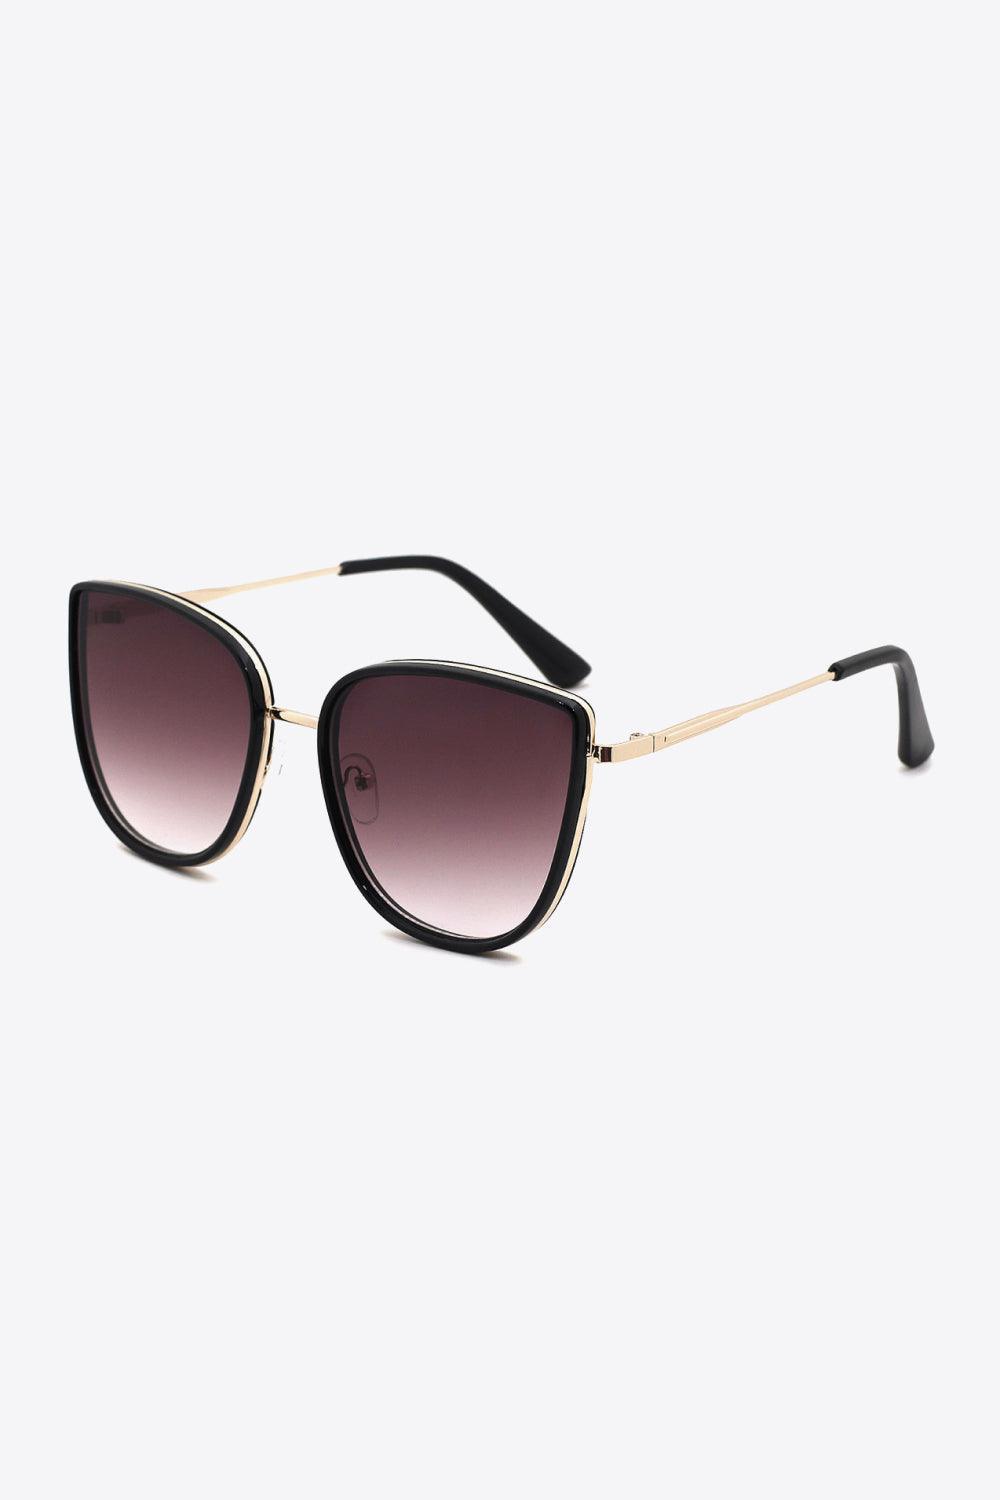 Women's Wayfarer Style Acetate Lens Sunglasses - MXSTUDIO.COM